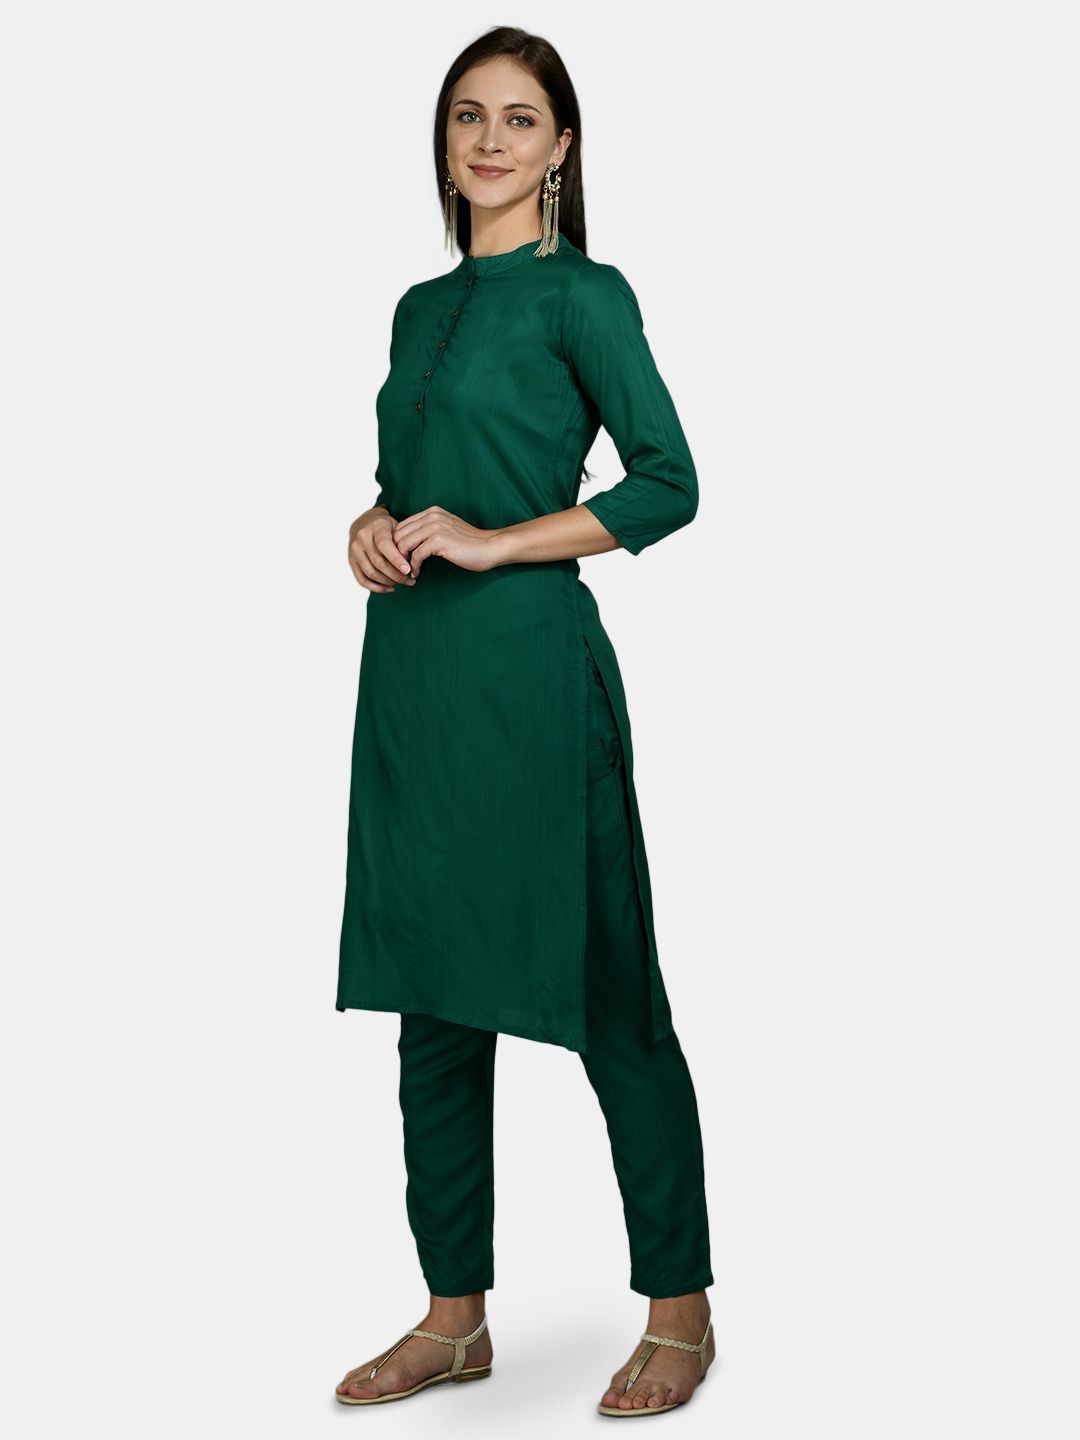 Women's Green Silk Solid 3/4 Sleeve Round Neck Casual Kurta Pant Dupatta Set - Myshka